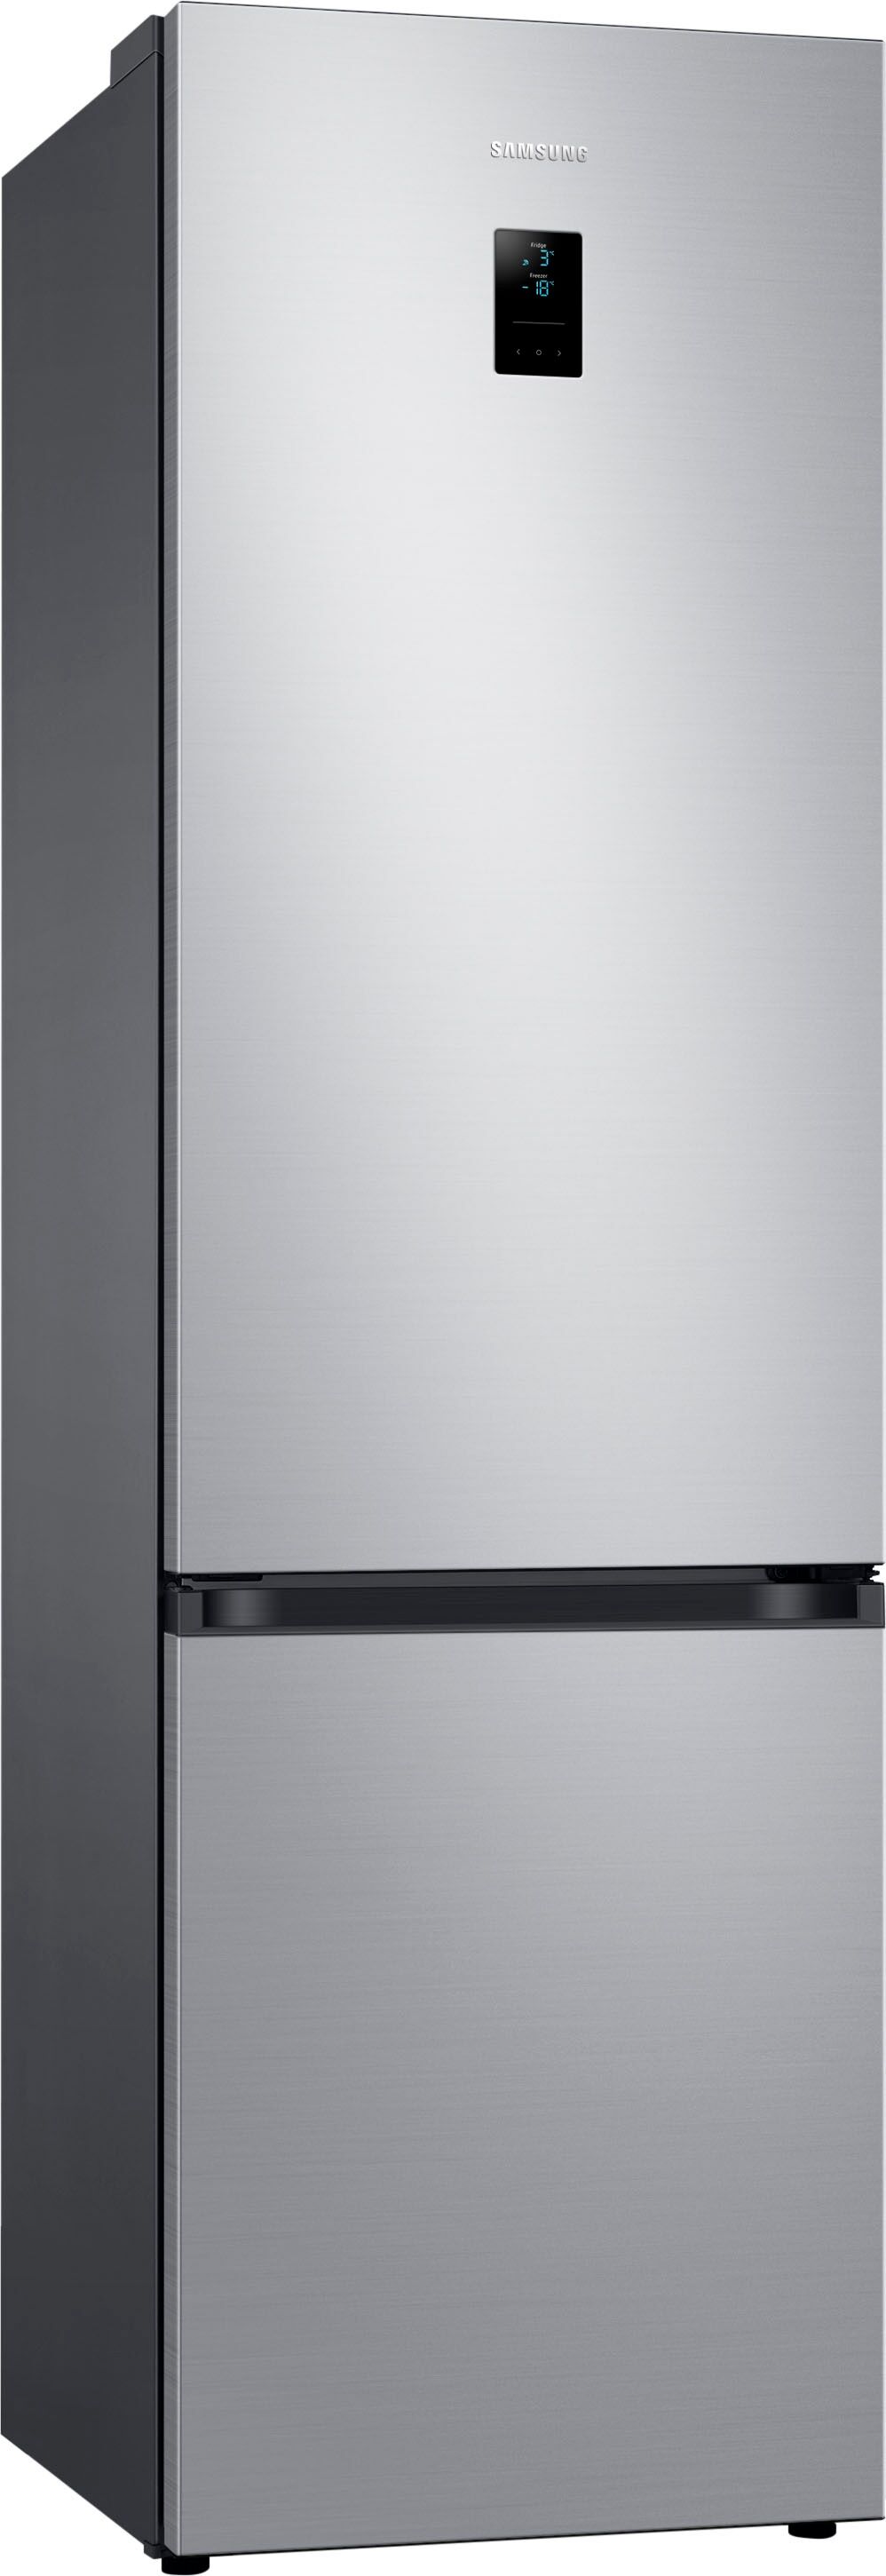 Samsung Kühl-/Gefrierkombination, RL38T671DSA, 203 cm hoch, 59,5 breit D (A bis G) Rechtsanschlag grau Kühl-/Gefrierkombination Kühl-Gefrierkombinationen Kühlschränke Haushaltsgeräte